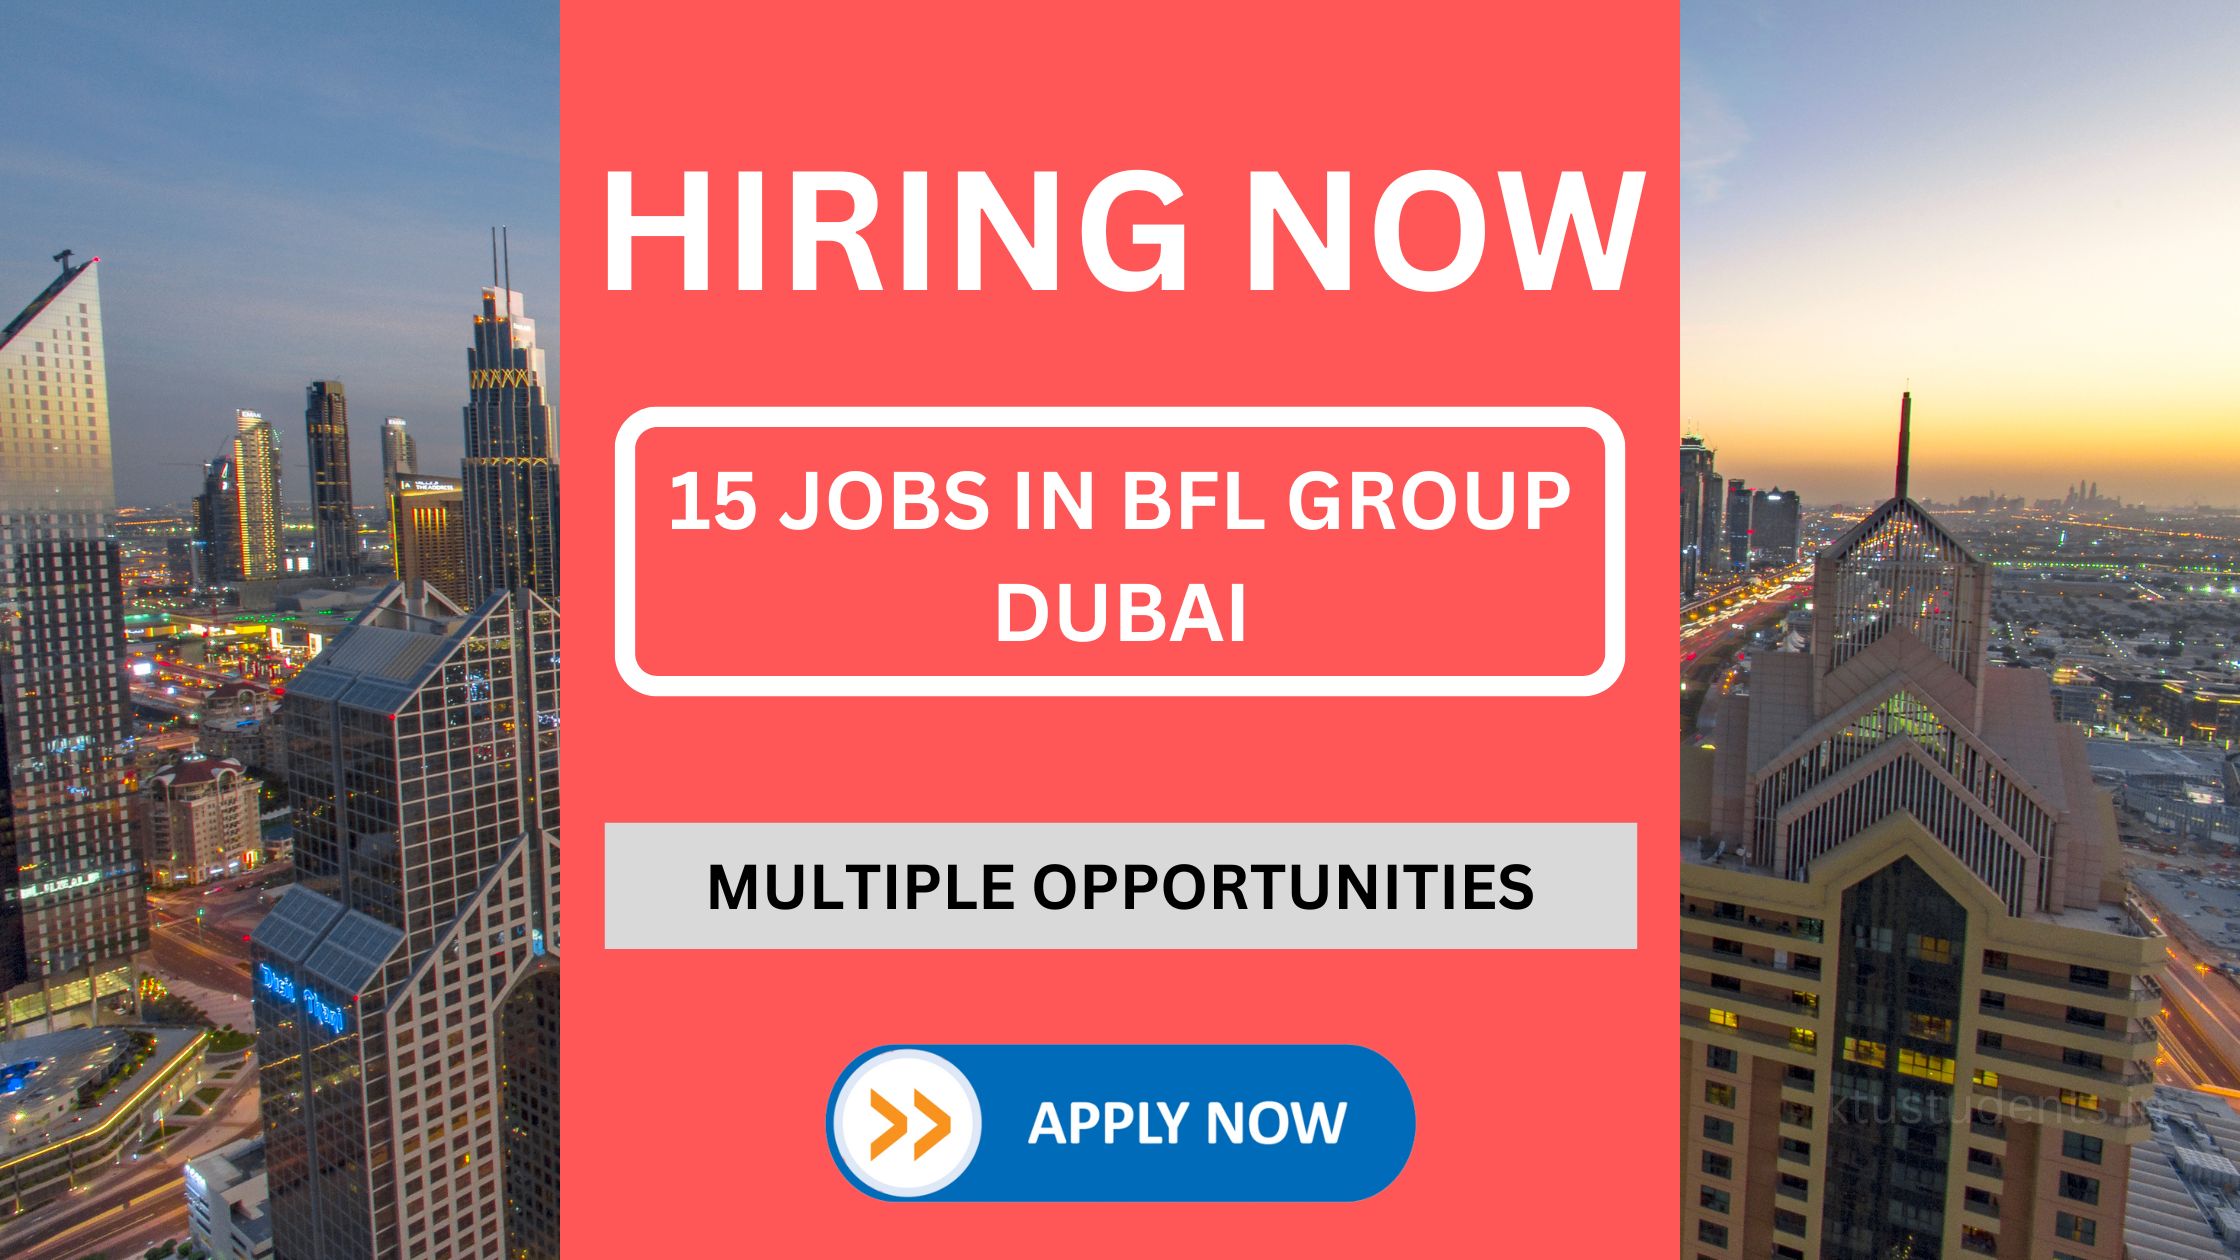 BFL گروپ میں ملازمت کے دلچسپ مواقع: دبئی میں ہول سیل اسسٹنٹ، SEO ایگزیکٹو، اور مزید کے لیے درخواست دیں